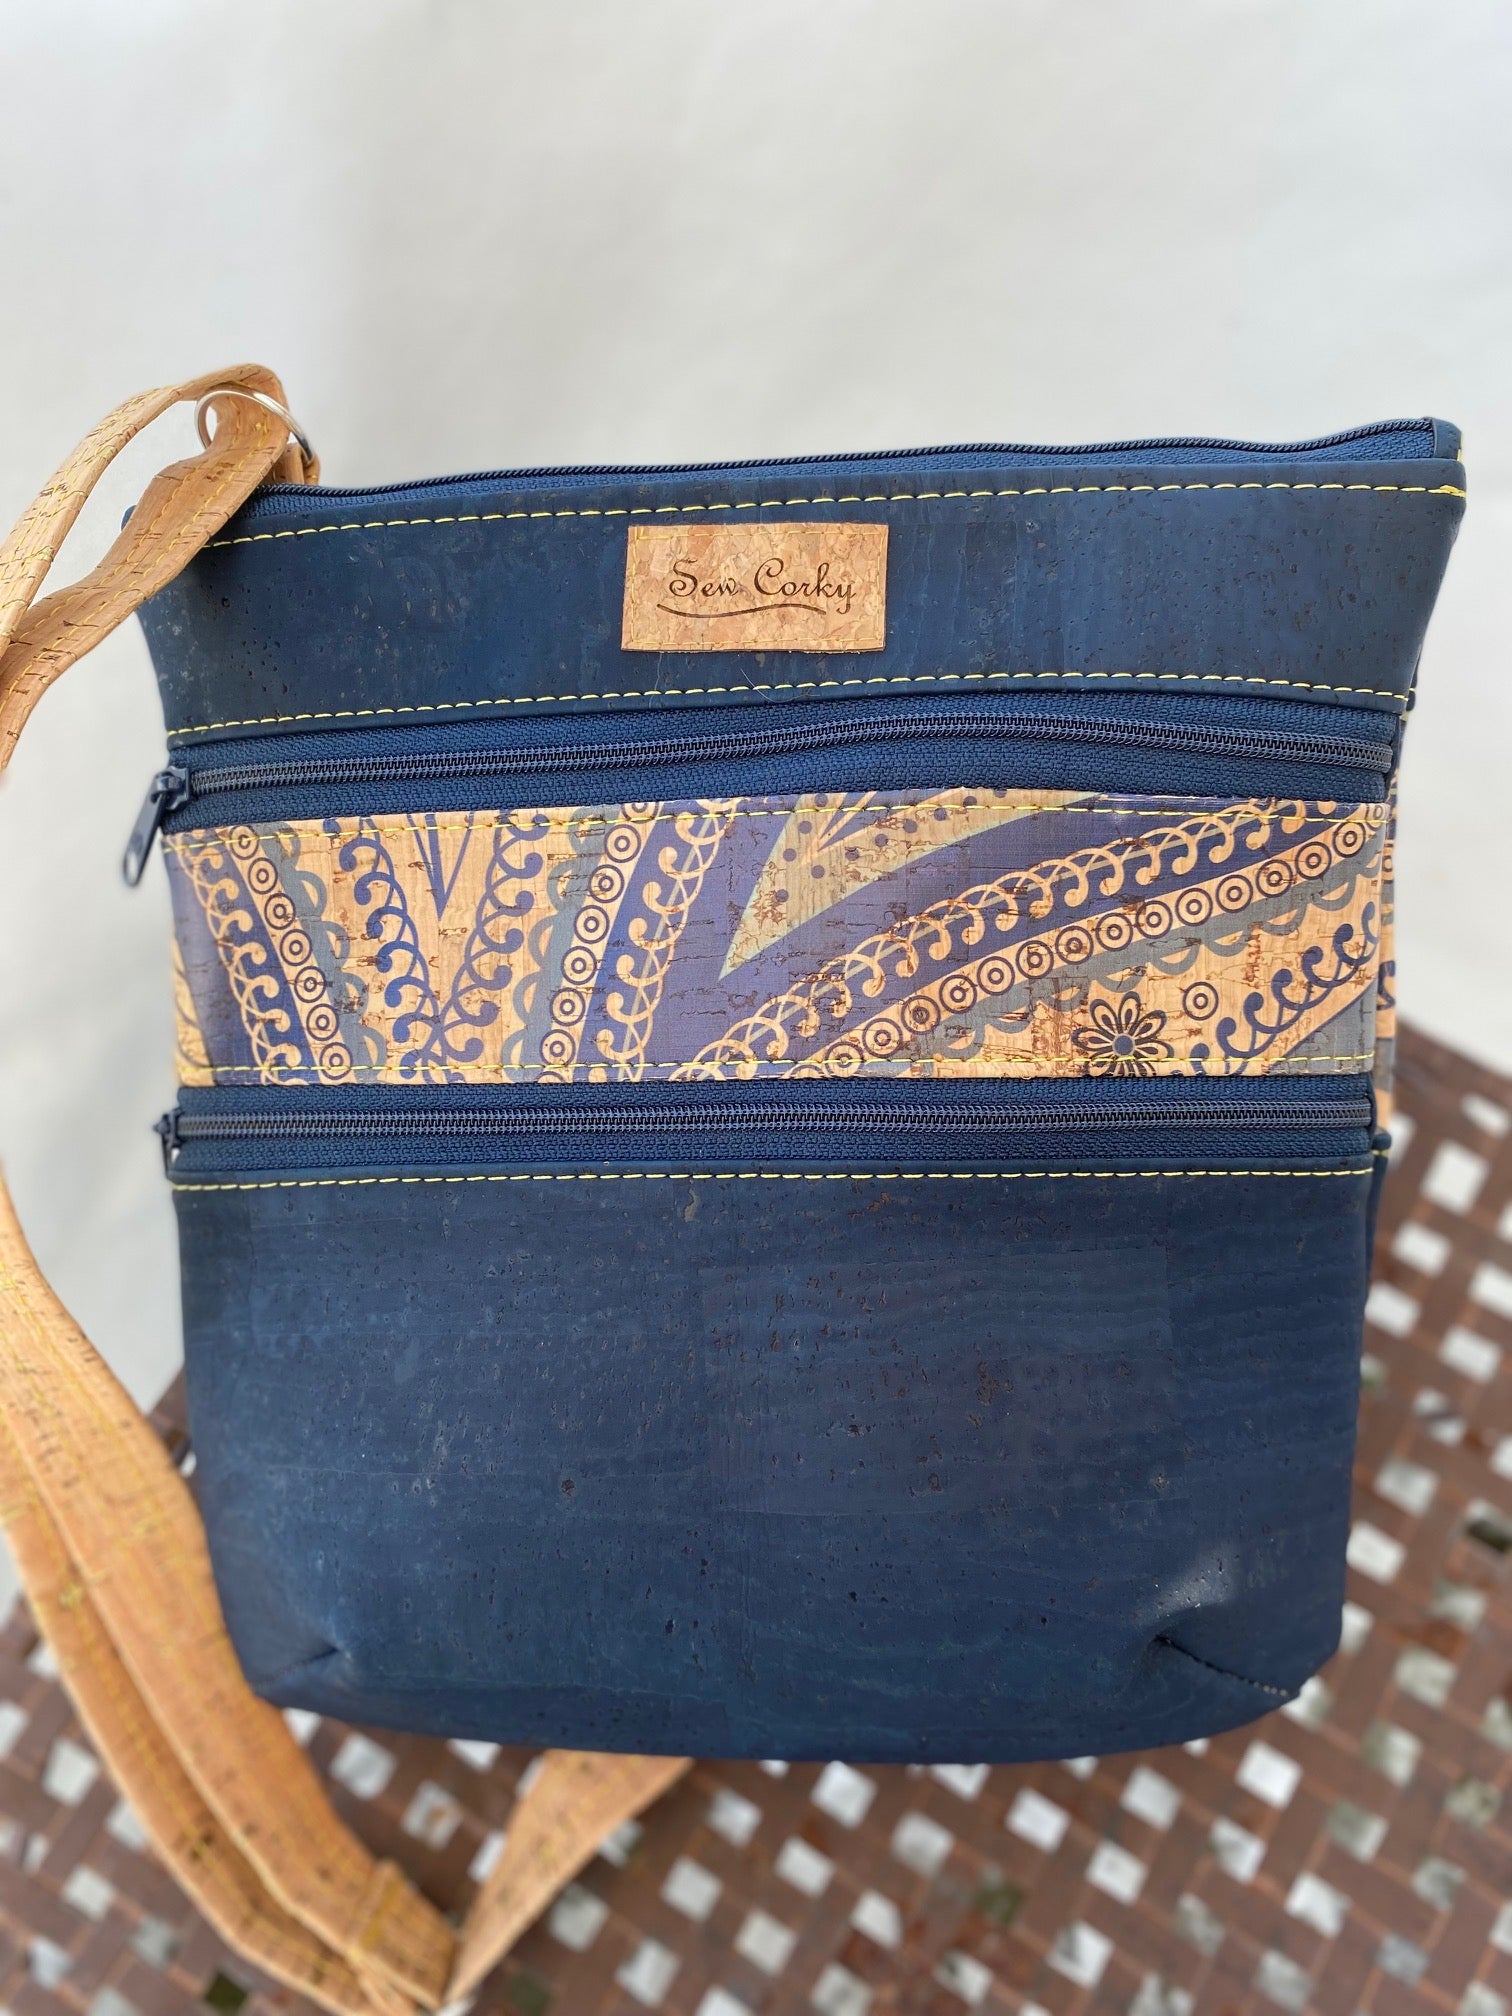 A7-3 Zip Crossbody Cork Handbag in Dark Blue and Paisley Pattern